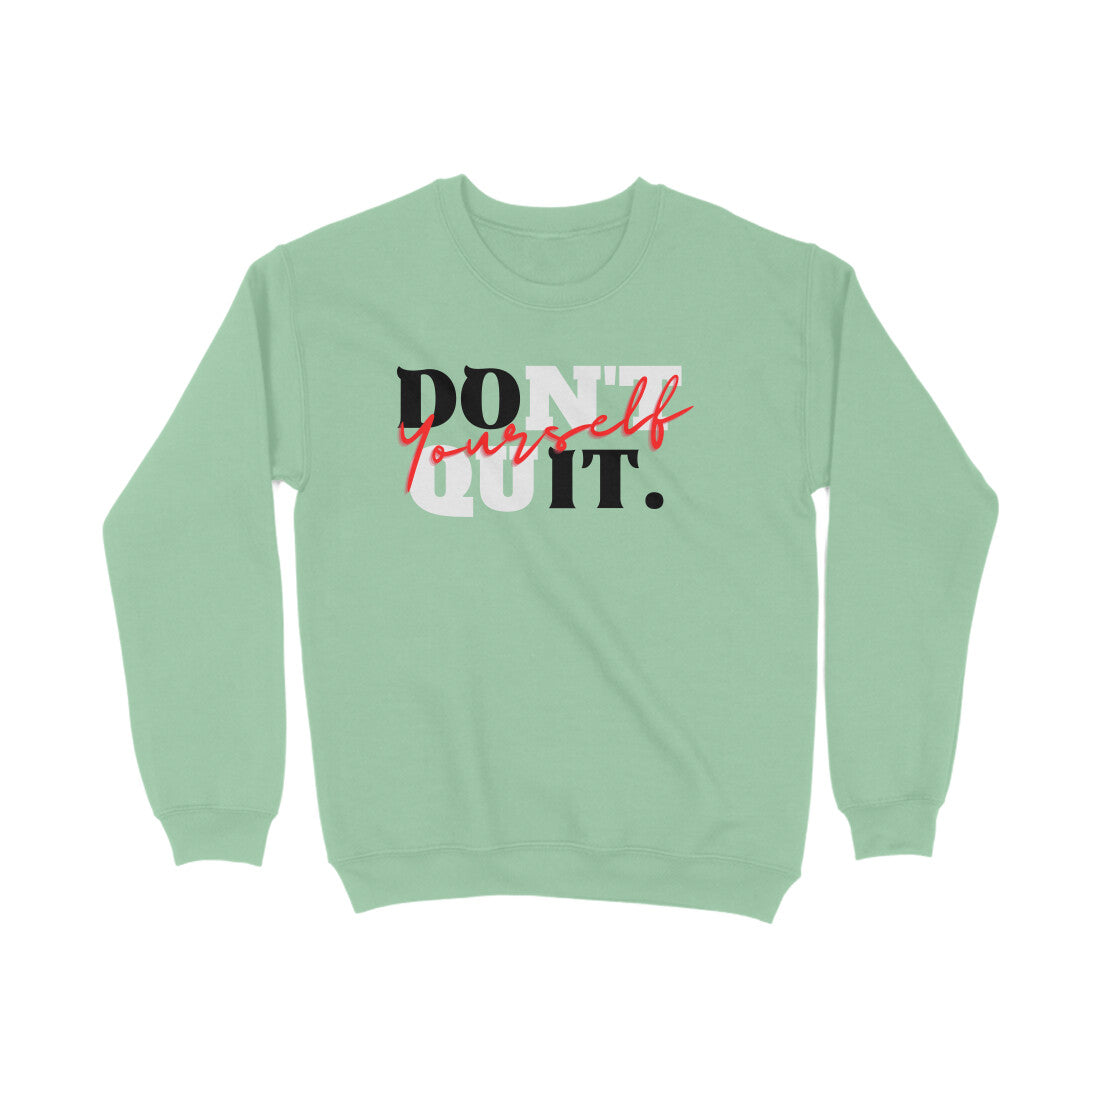 Don't Quit Sweatshirts